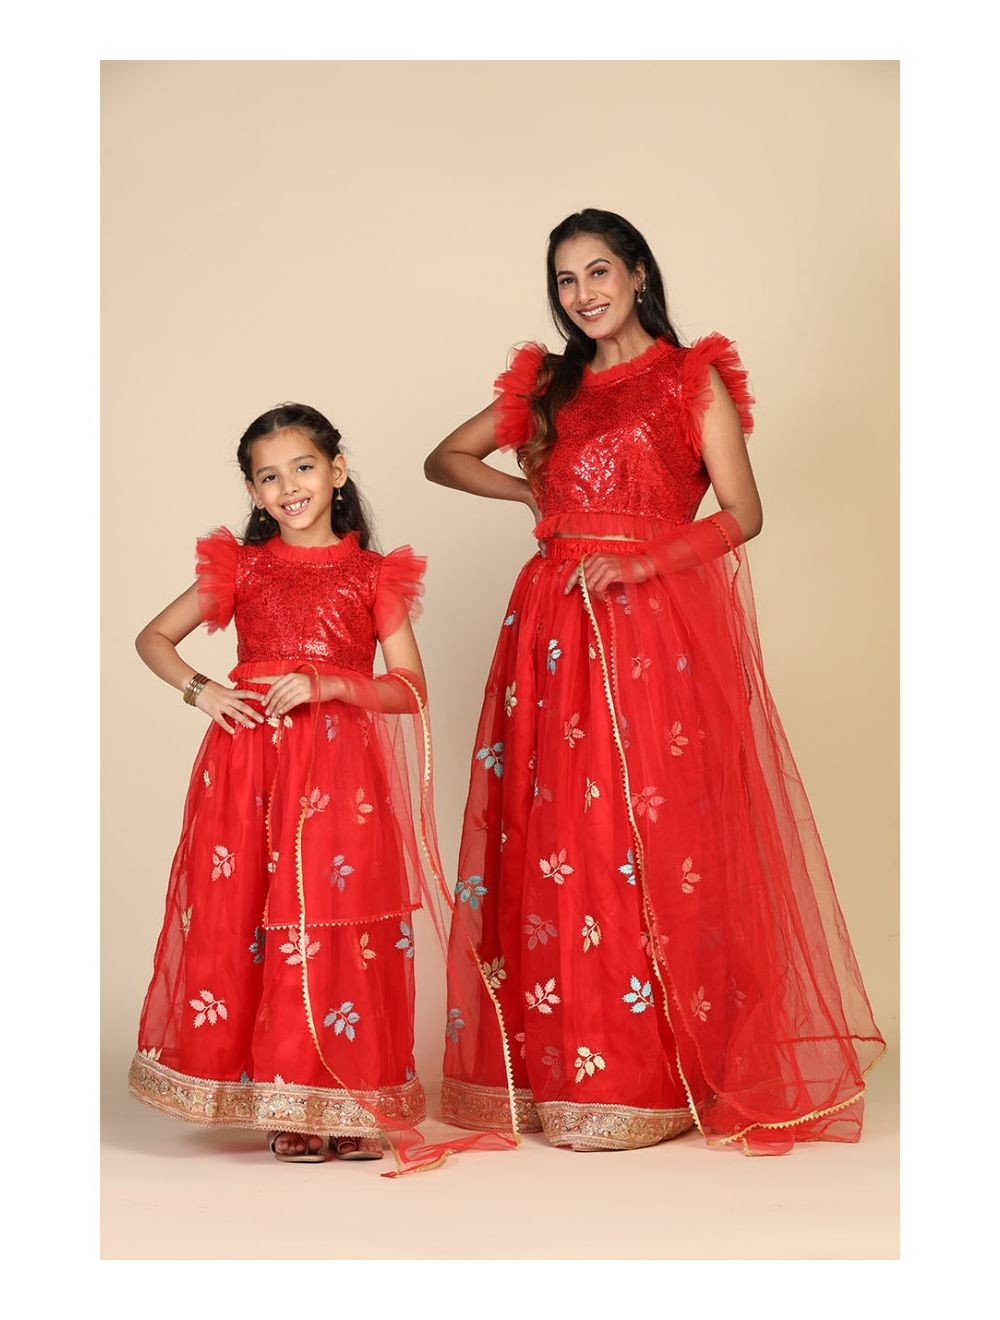 Girls Dresses Dupatta - Buy Girls Dresses Dupatta online in India